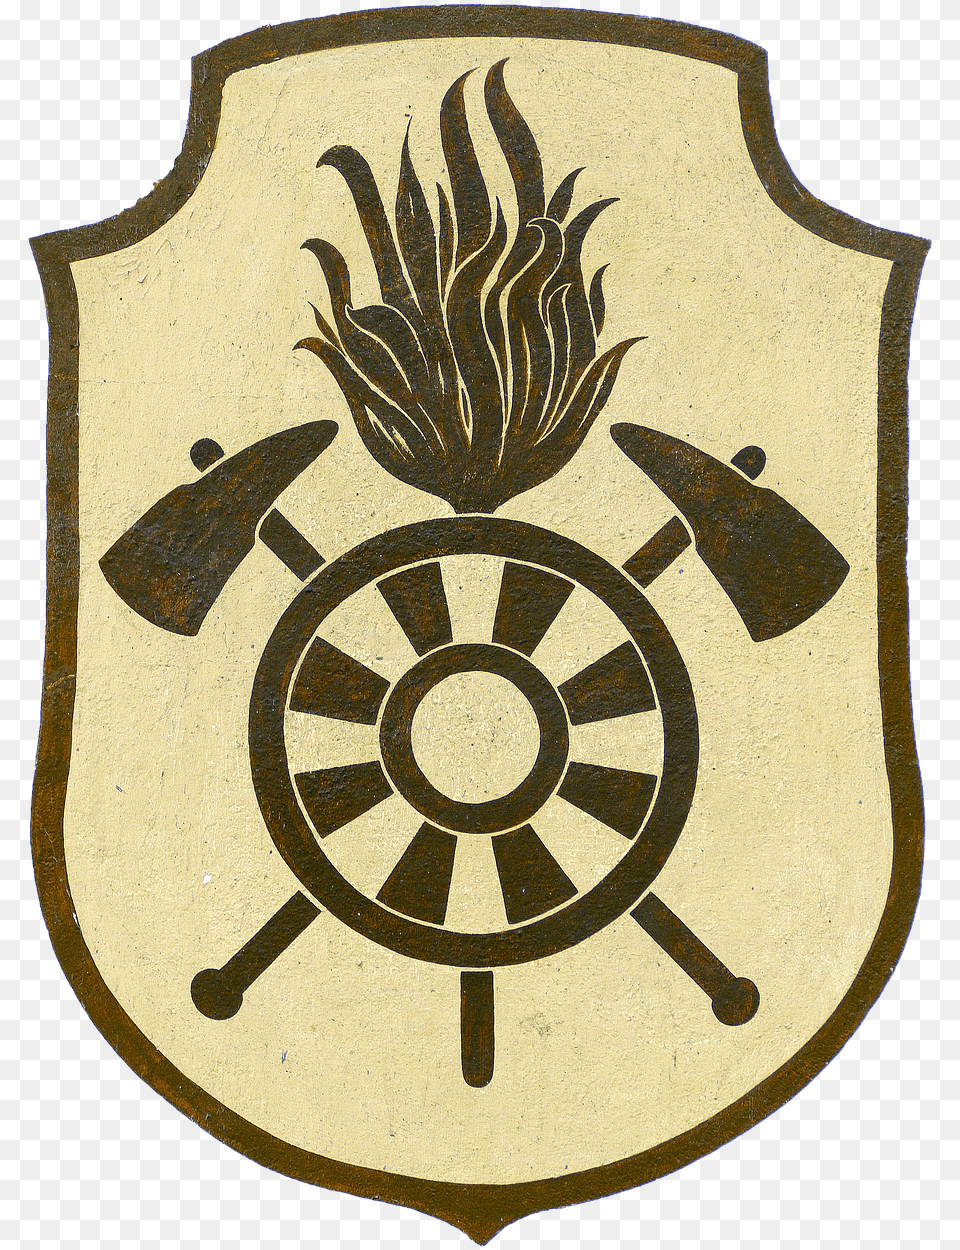 Fire Emblem Logo Fire Emblem Coat Of Arms Mural Network Nodes Icon, Armor, Machine, Shield, Wheel Free Transparent Png